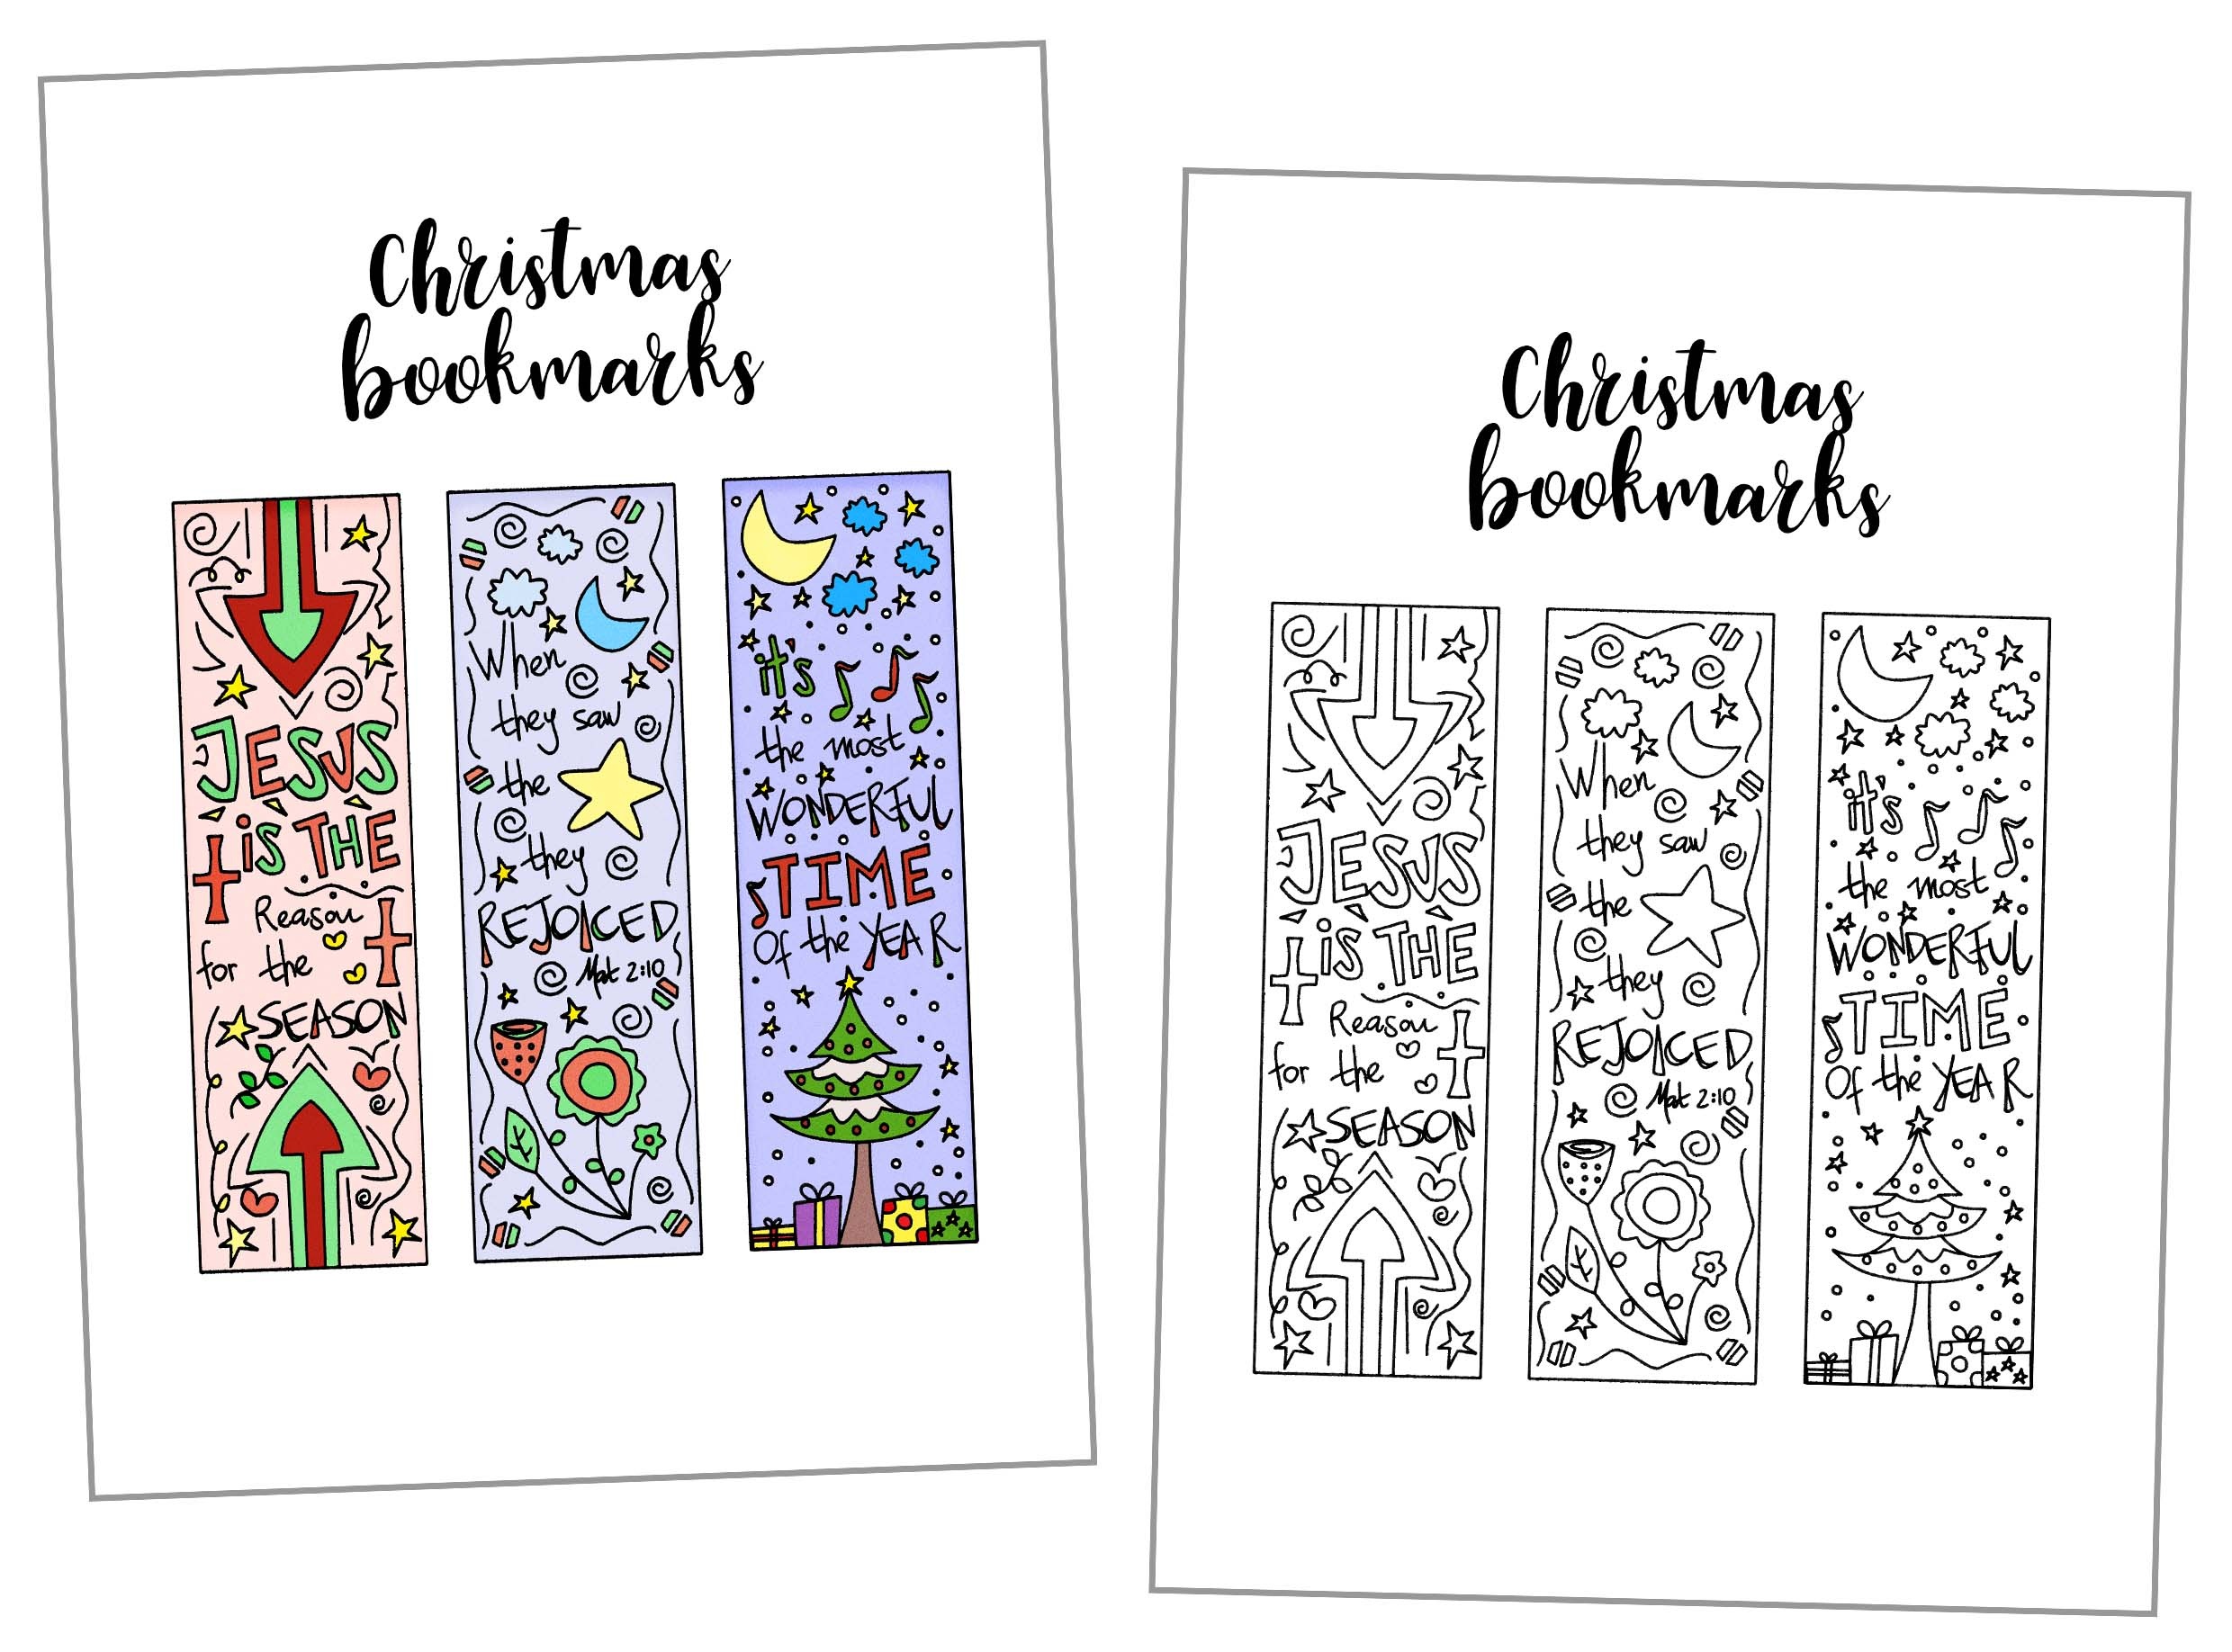 Coloring Christmas Bookmarks Free Printable - Free Printable Christmas Bookmarks To Color